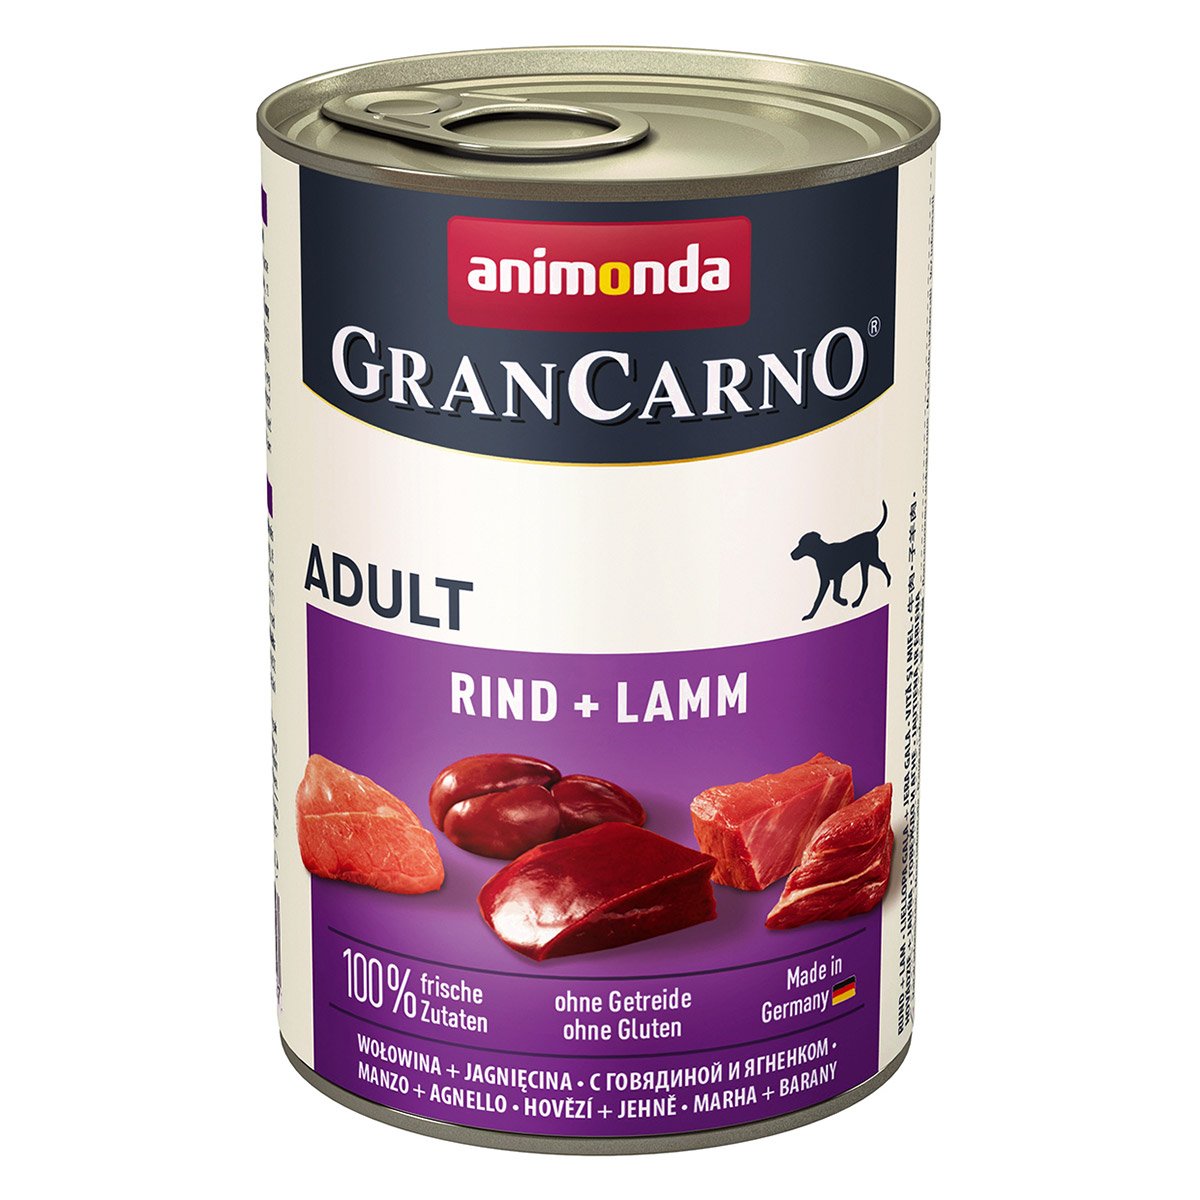 animonda GranCarno Adult Rind und Lamm 24x400g von animonda GranCarno